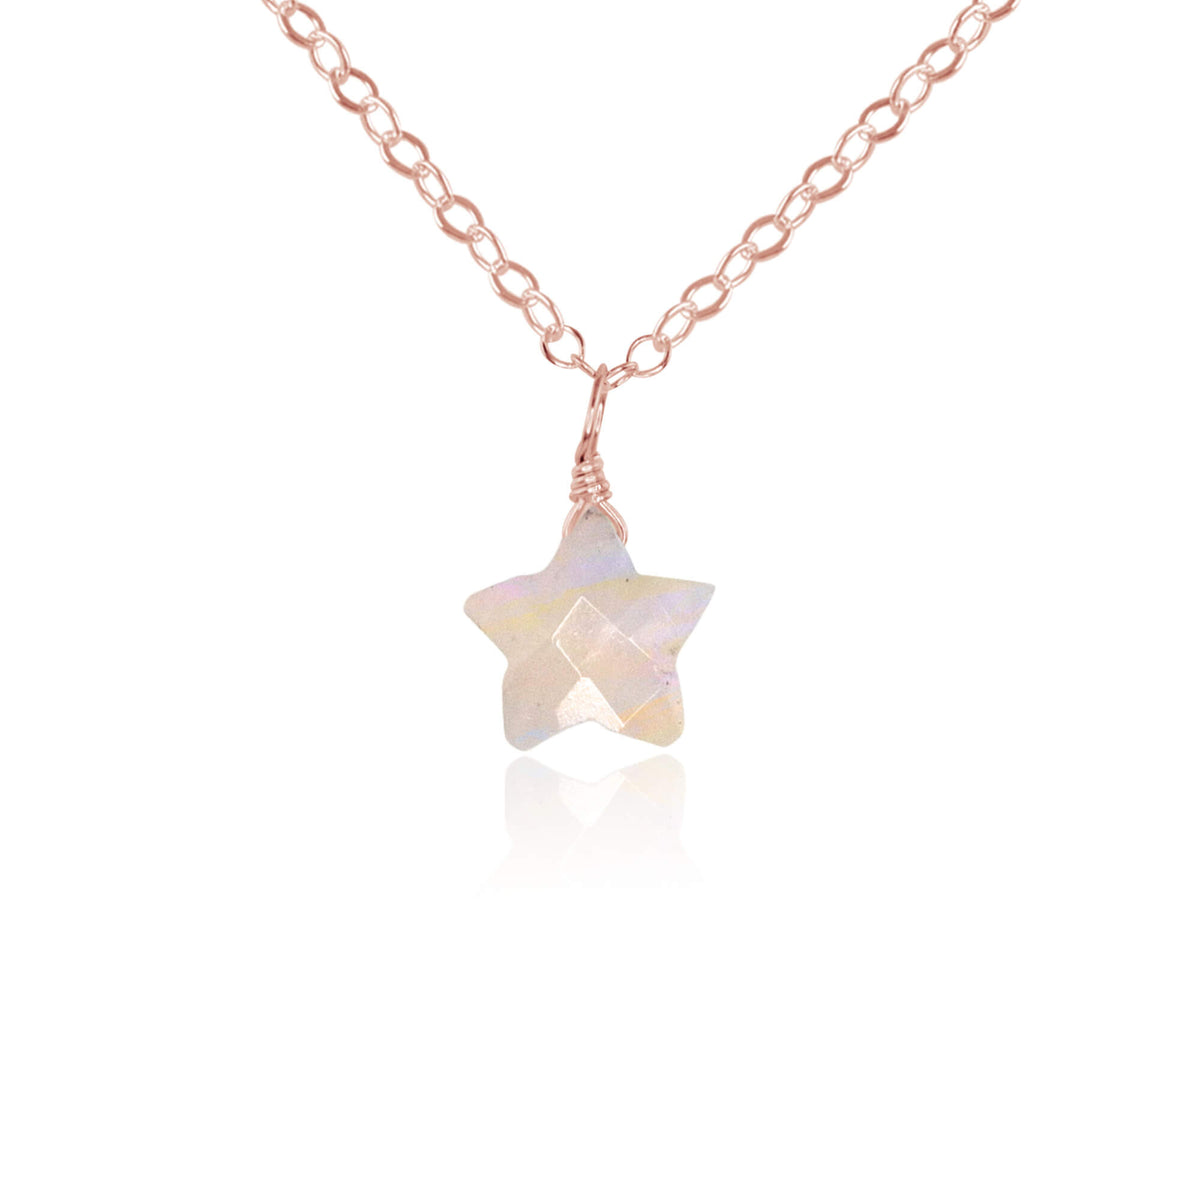 Crystal Star Pendant Necklace - Rainbow Moonstone - 14K Rose Gold Fill - Luna Tide Handmade Jewellery